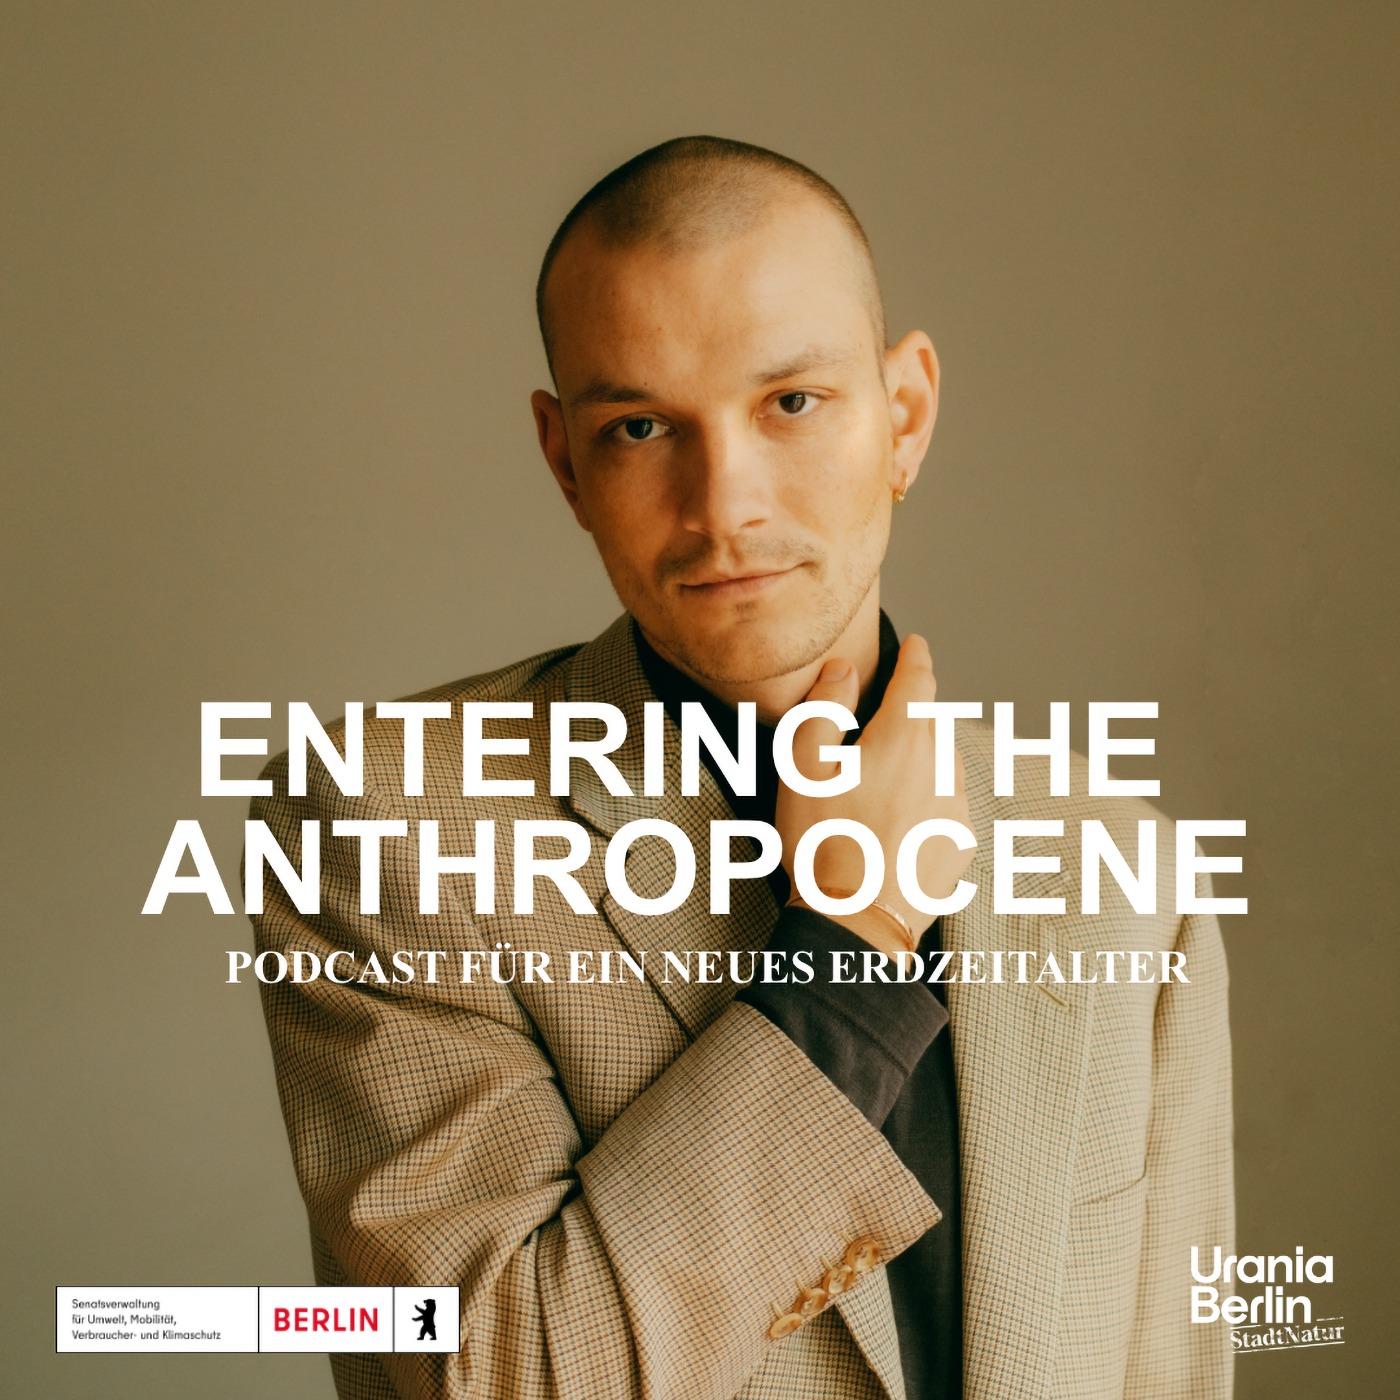 Entering the Anthropocene